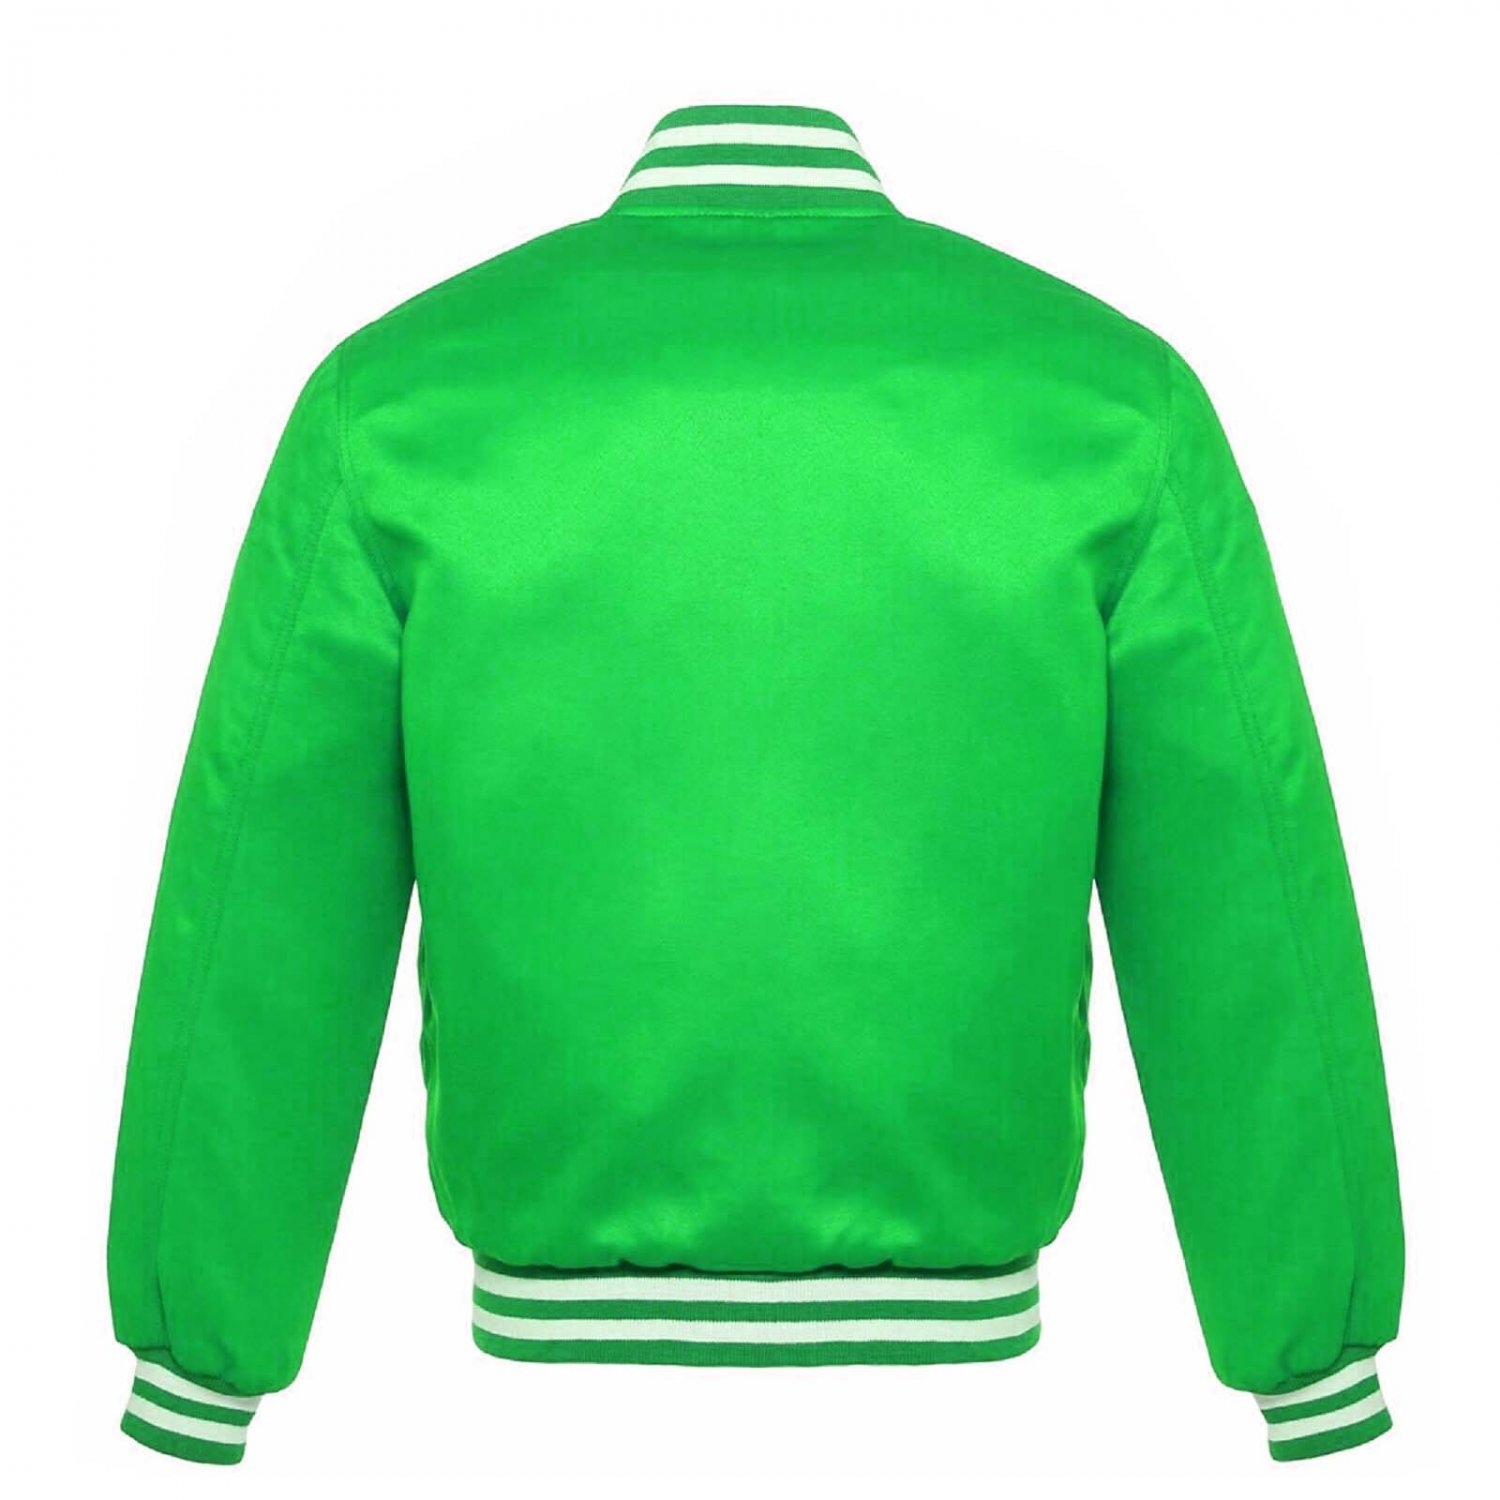 New Satin Baseball Collage Green varsity Bomber jacket White Trim size L